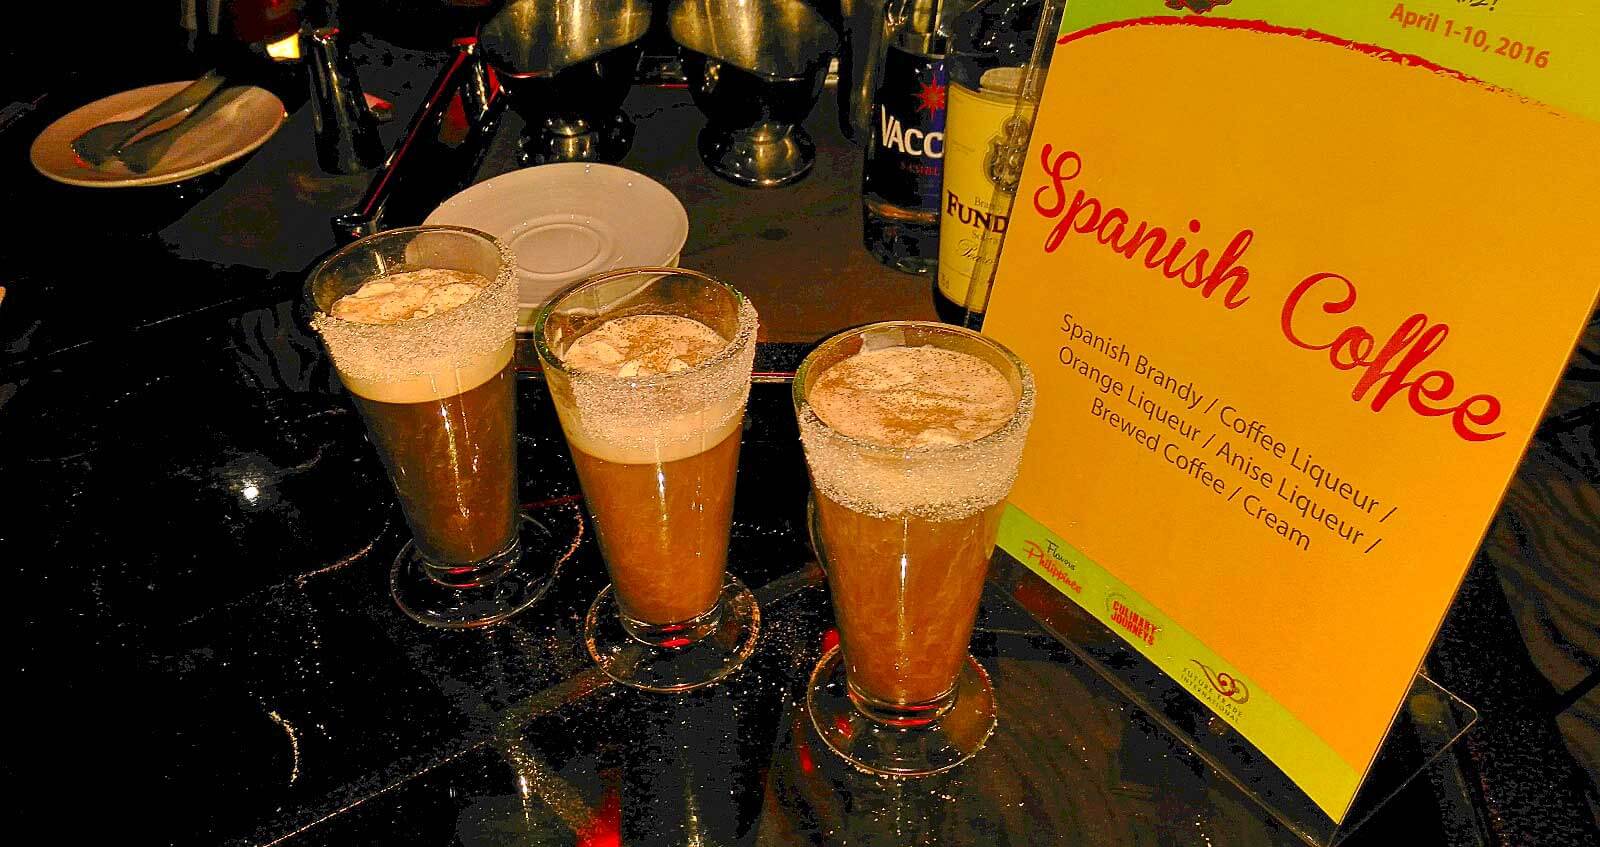 Sabores de Espana Spanish coffee